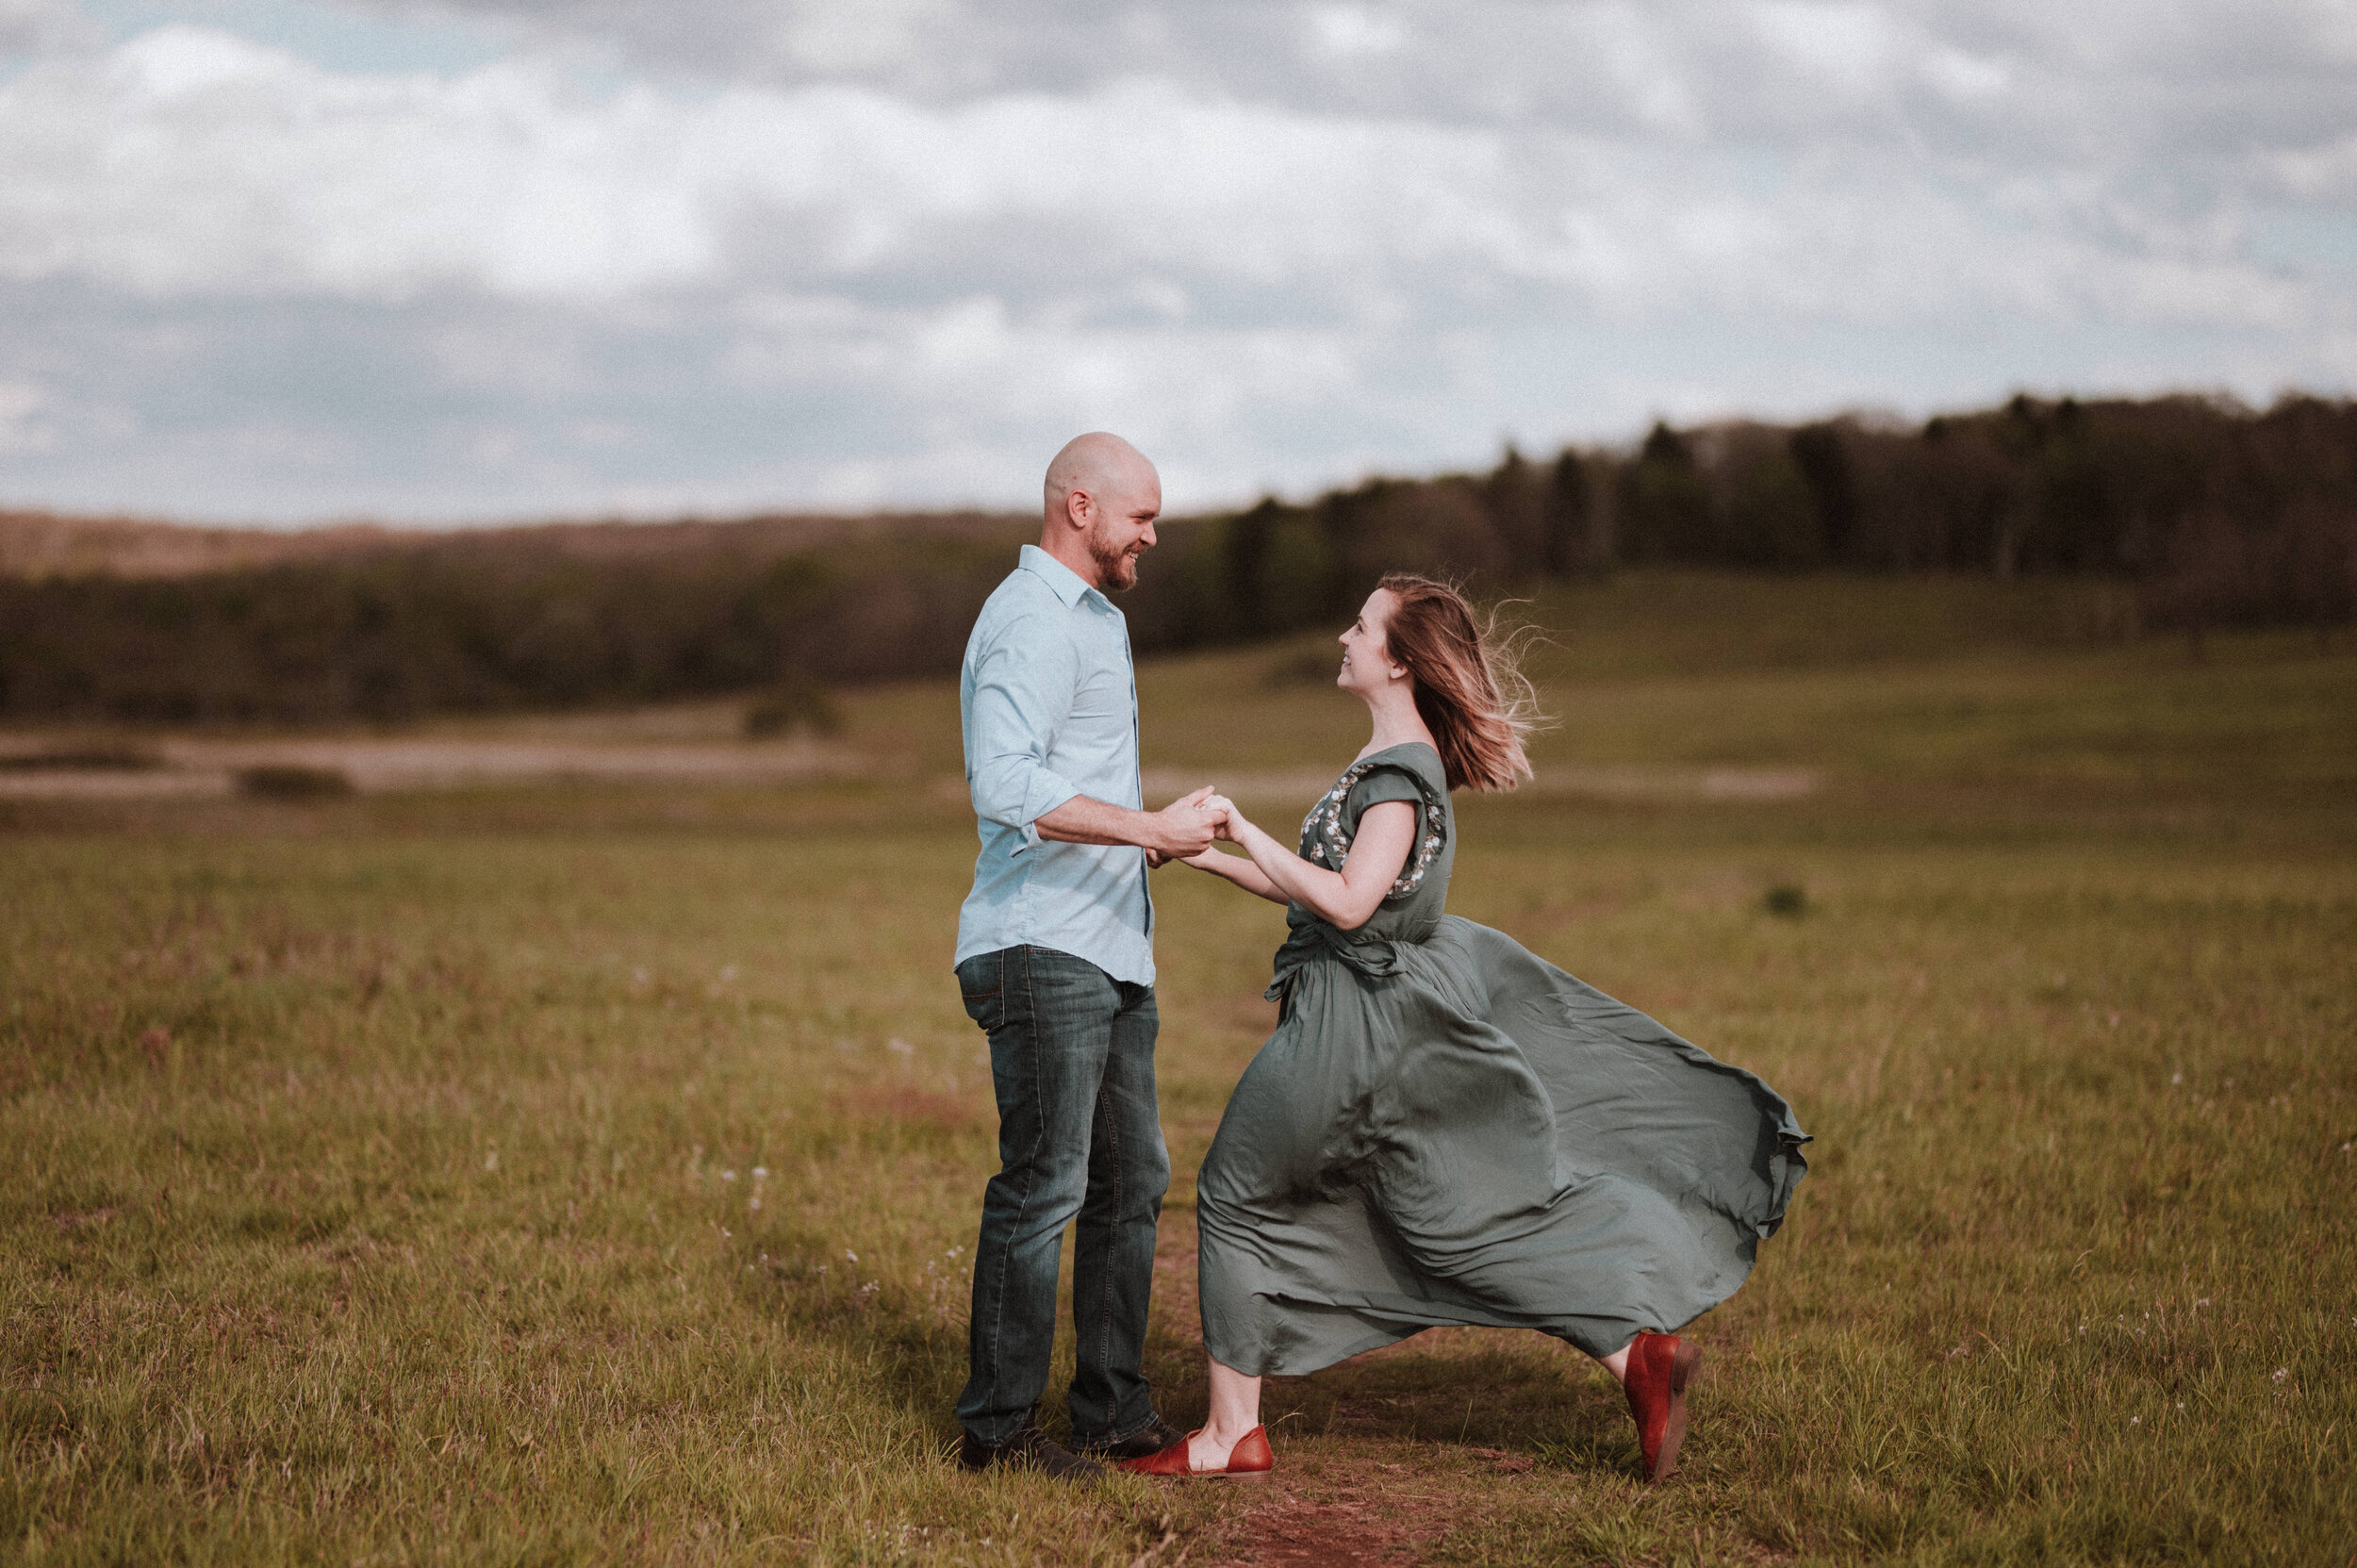  Engagement Session in Shenandoah Park | Shenandoah Valley | Shenandoah Wedding Photographer | 